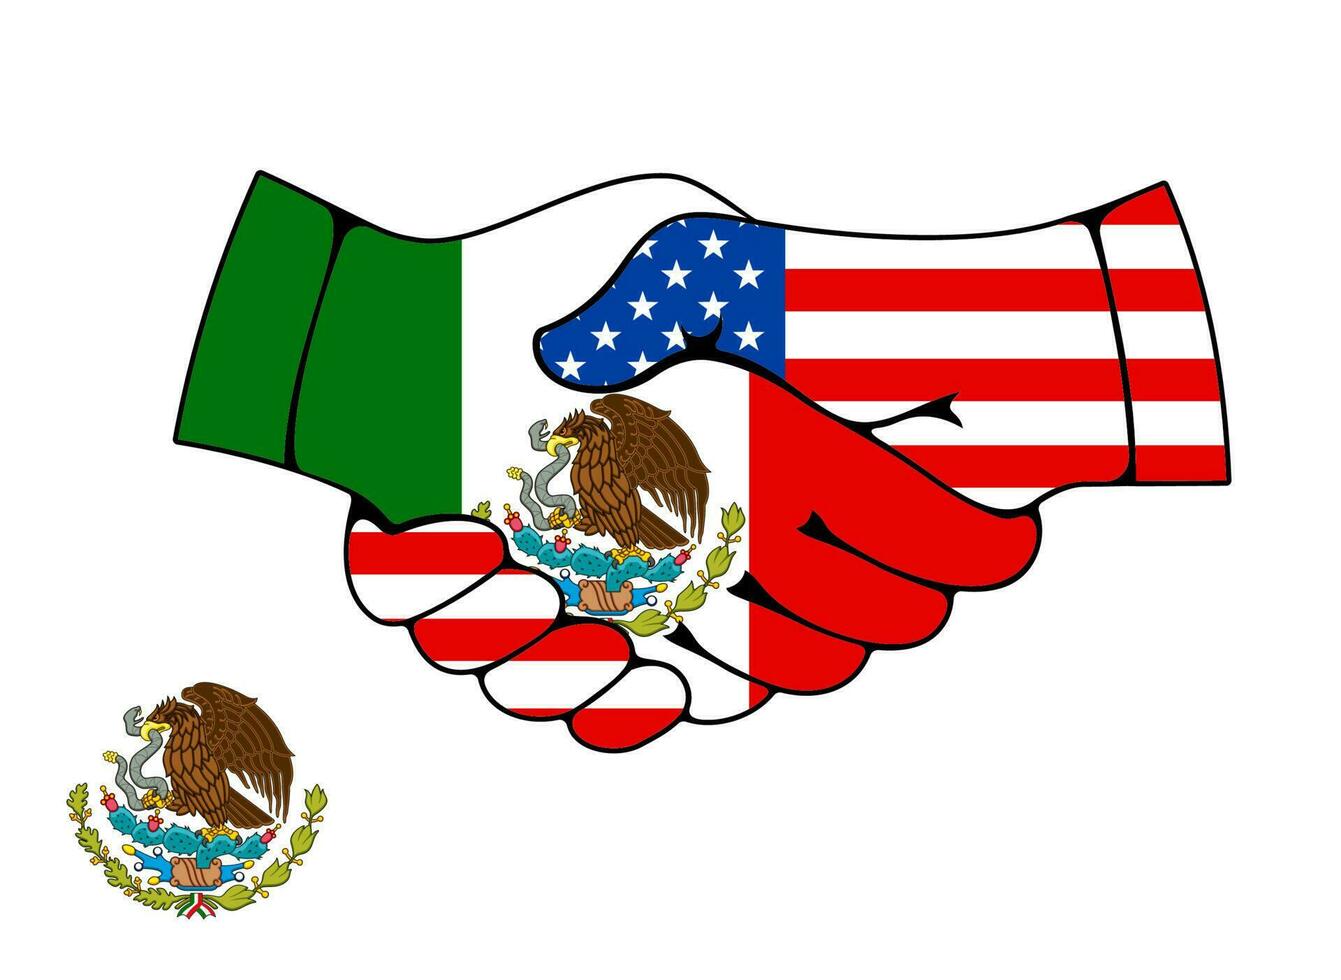 Messico e Stati Uniti d'America associazione stretta di mano vettore